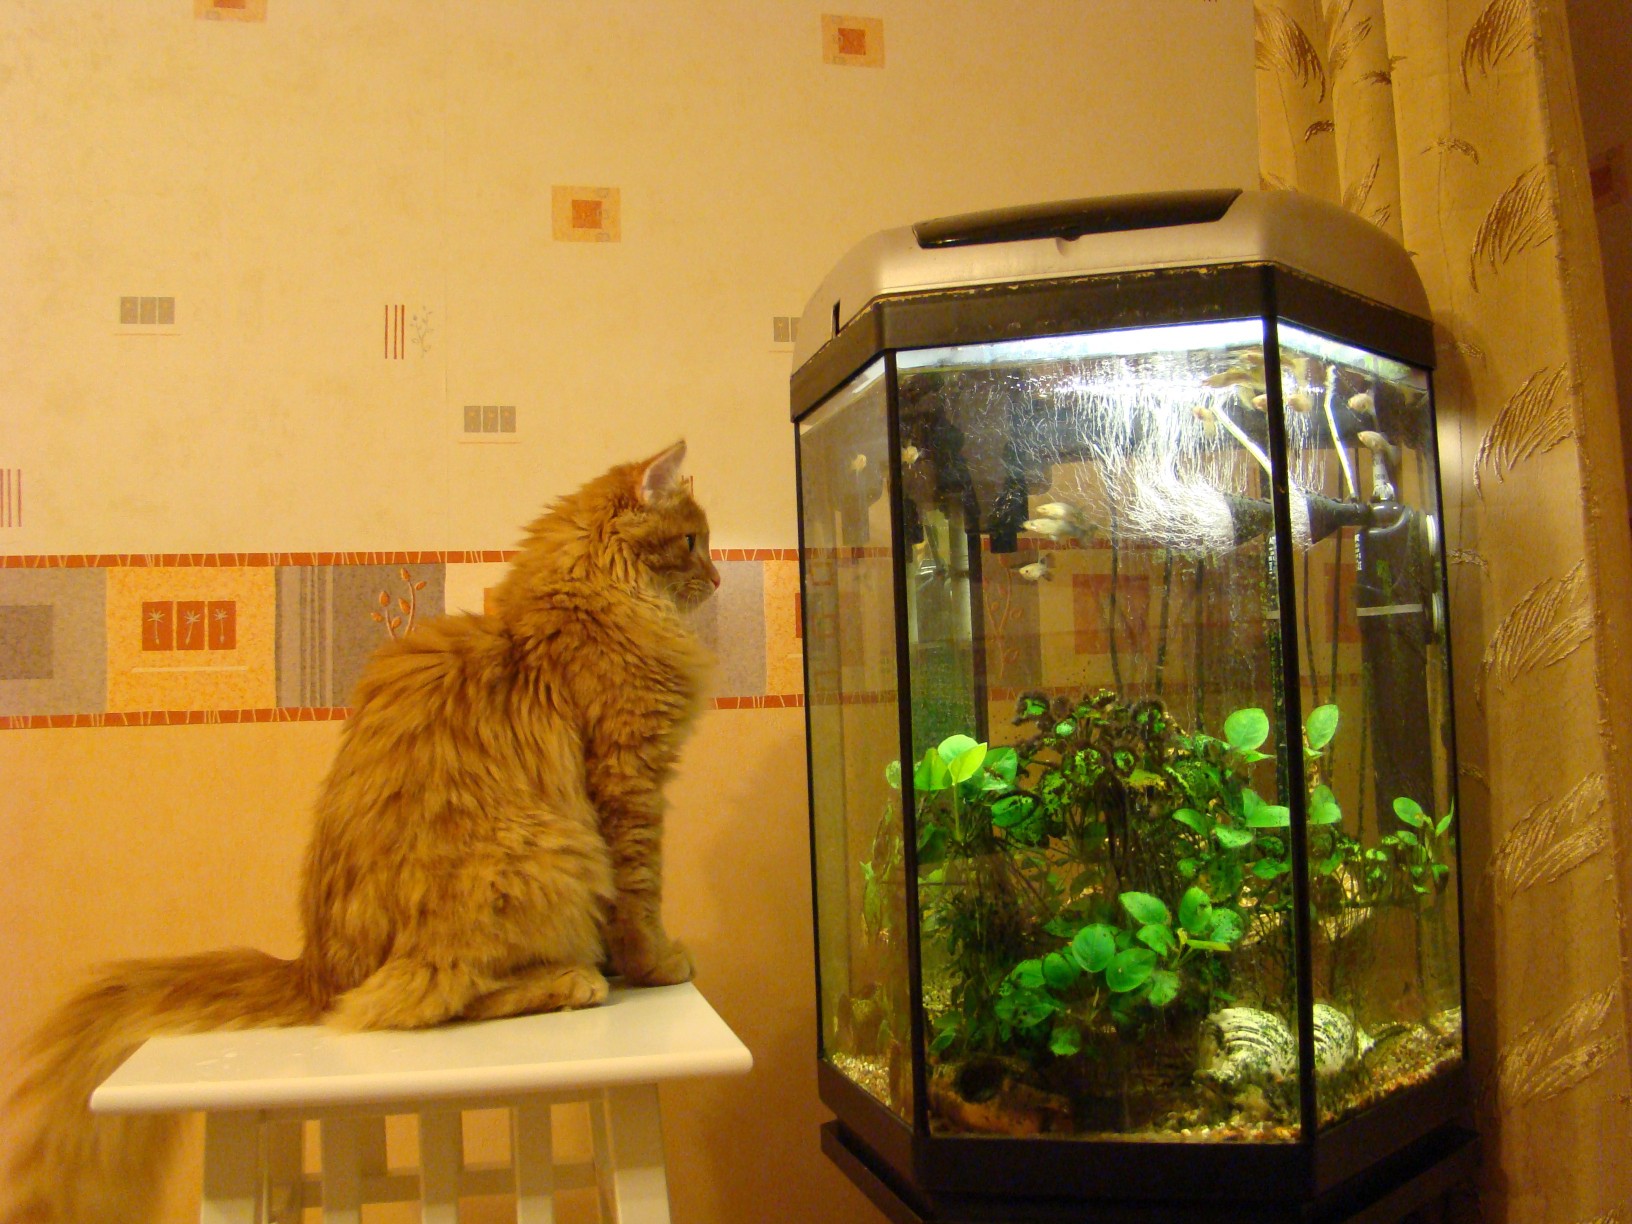 Аквариум для кота внутри. Аквариум для котиков. Кот и аквариум. Аквариум с рыбками для котов. Аквариум с местом для котика.